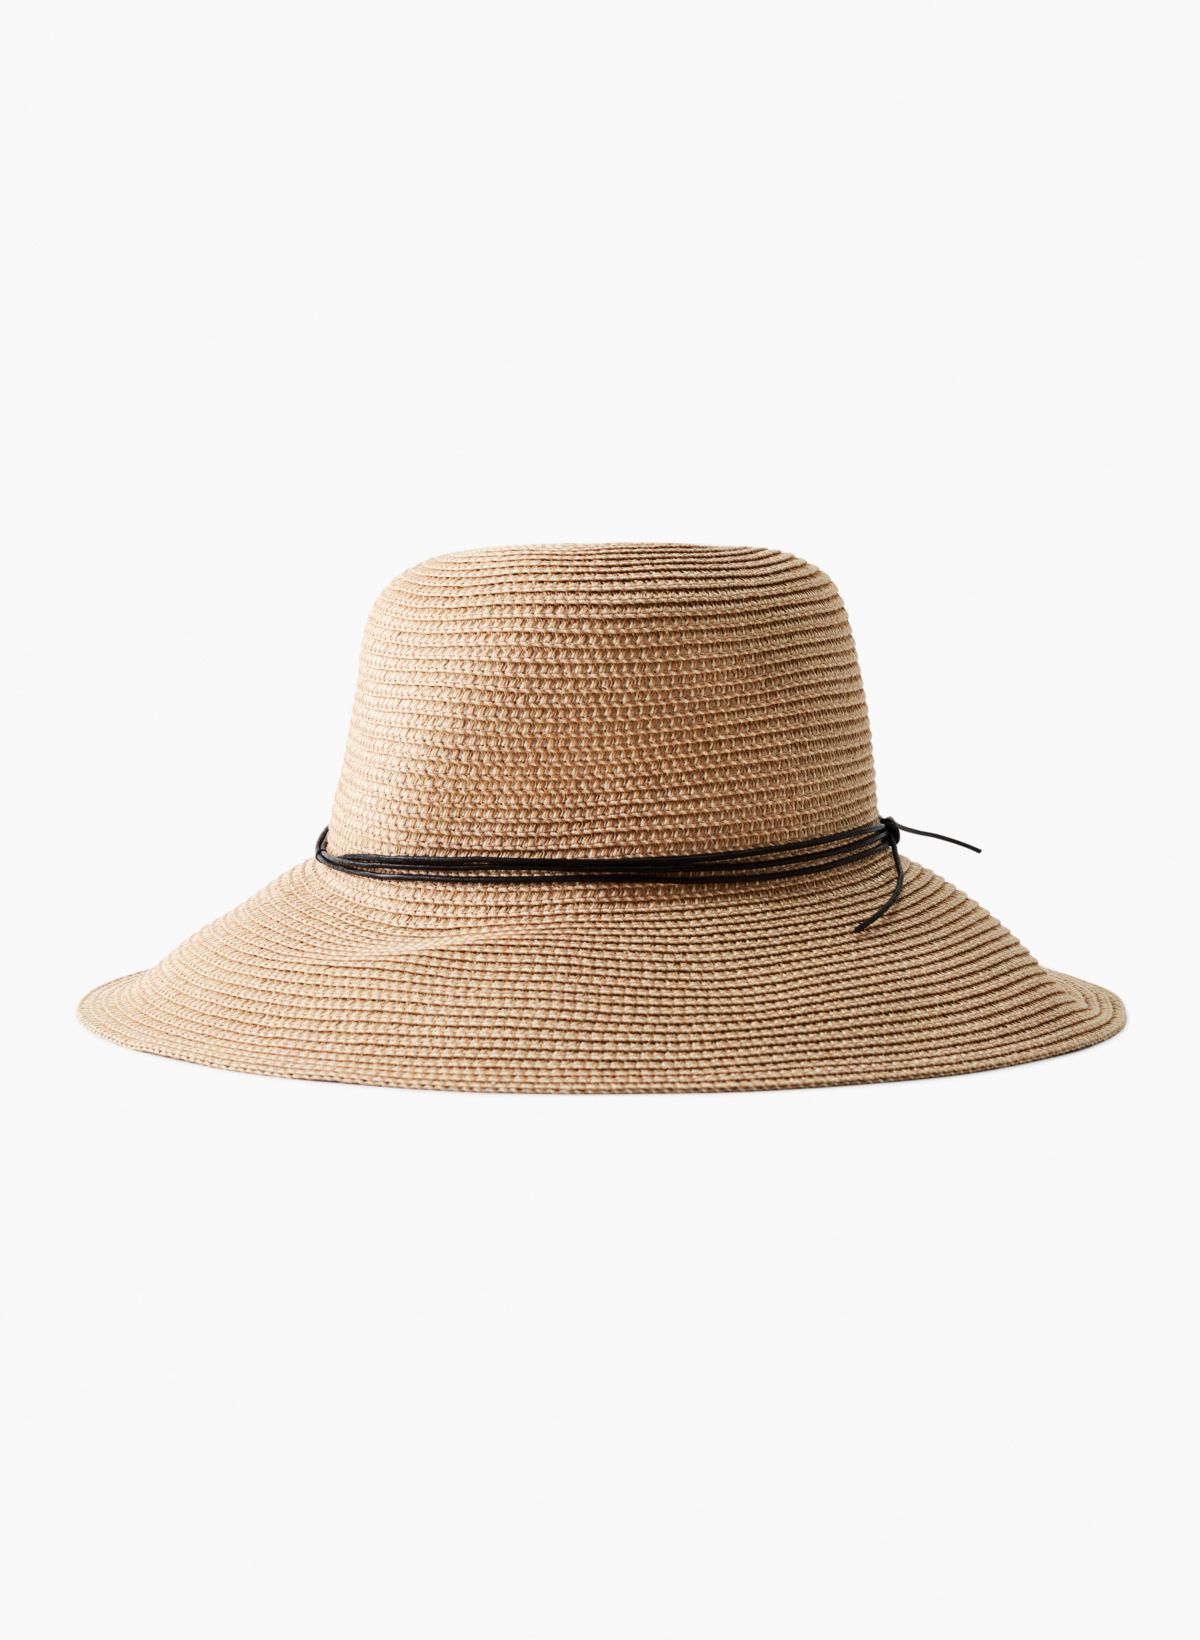 Sunday Best Eau Claire Hat in Natural Mix/Black Size Medium/Large